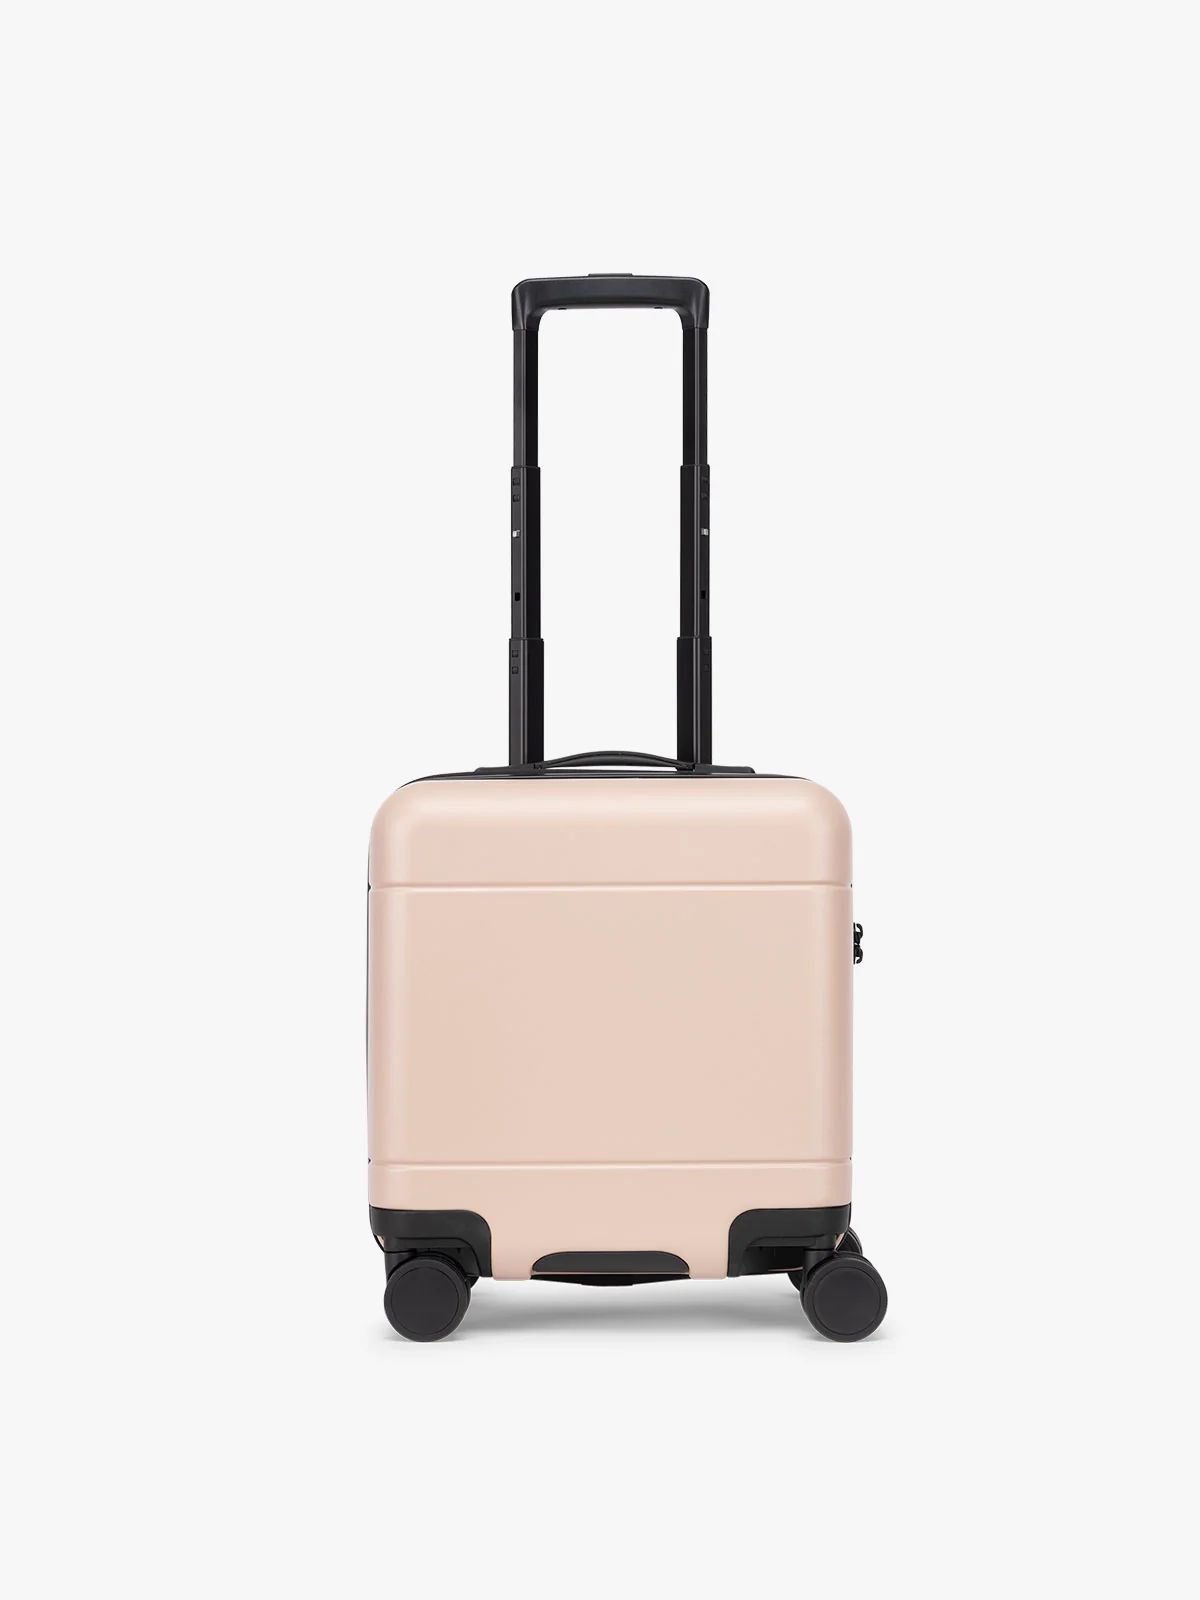 Hue Carry-On Luggage | CALPAK Travel